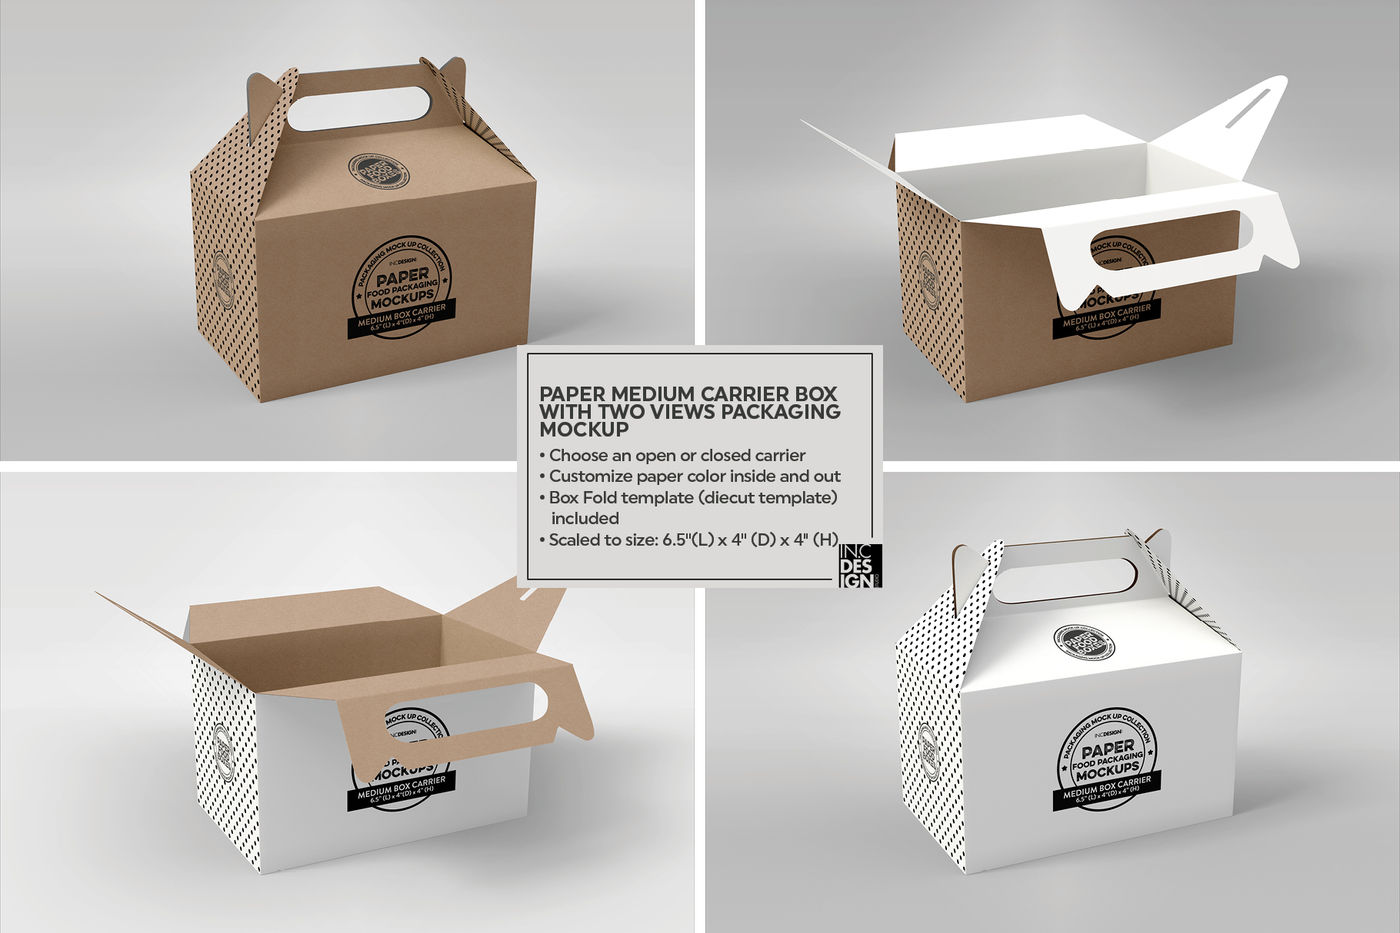 Download Vol 13 Paper Food Box Packaging Mockups By Inc Design Studio Thehungryjpeg Com PSD Mockup Templates